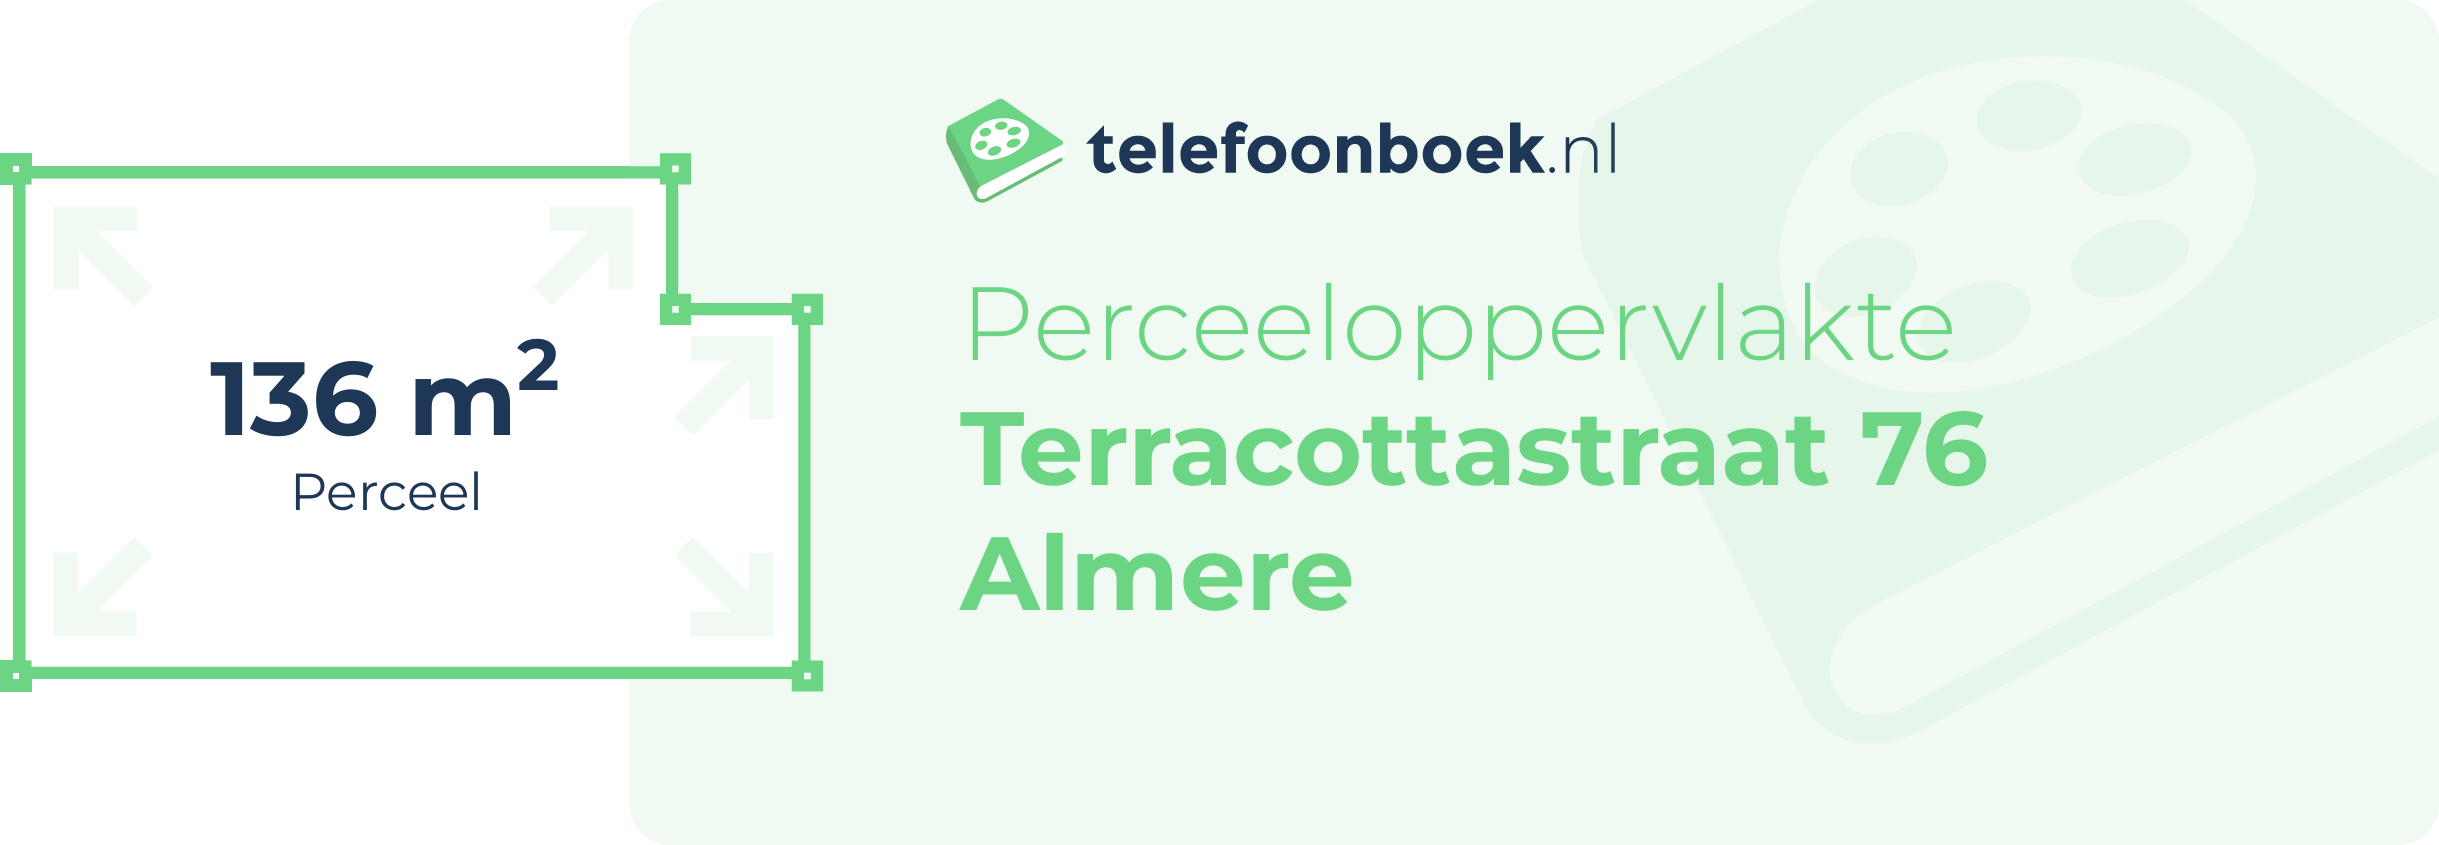 Perceeloppervlakte Terracottastraat 76 Almere